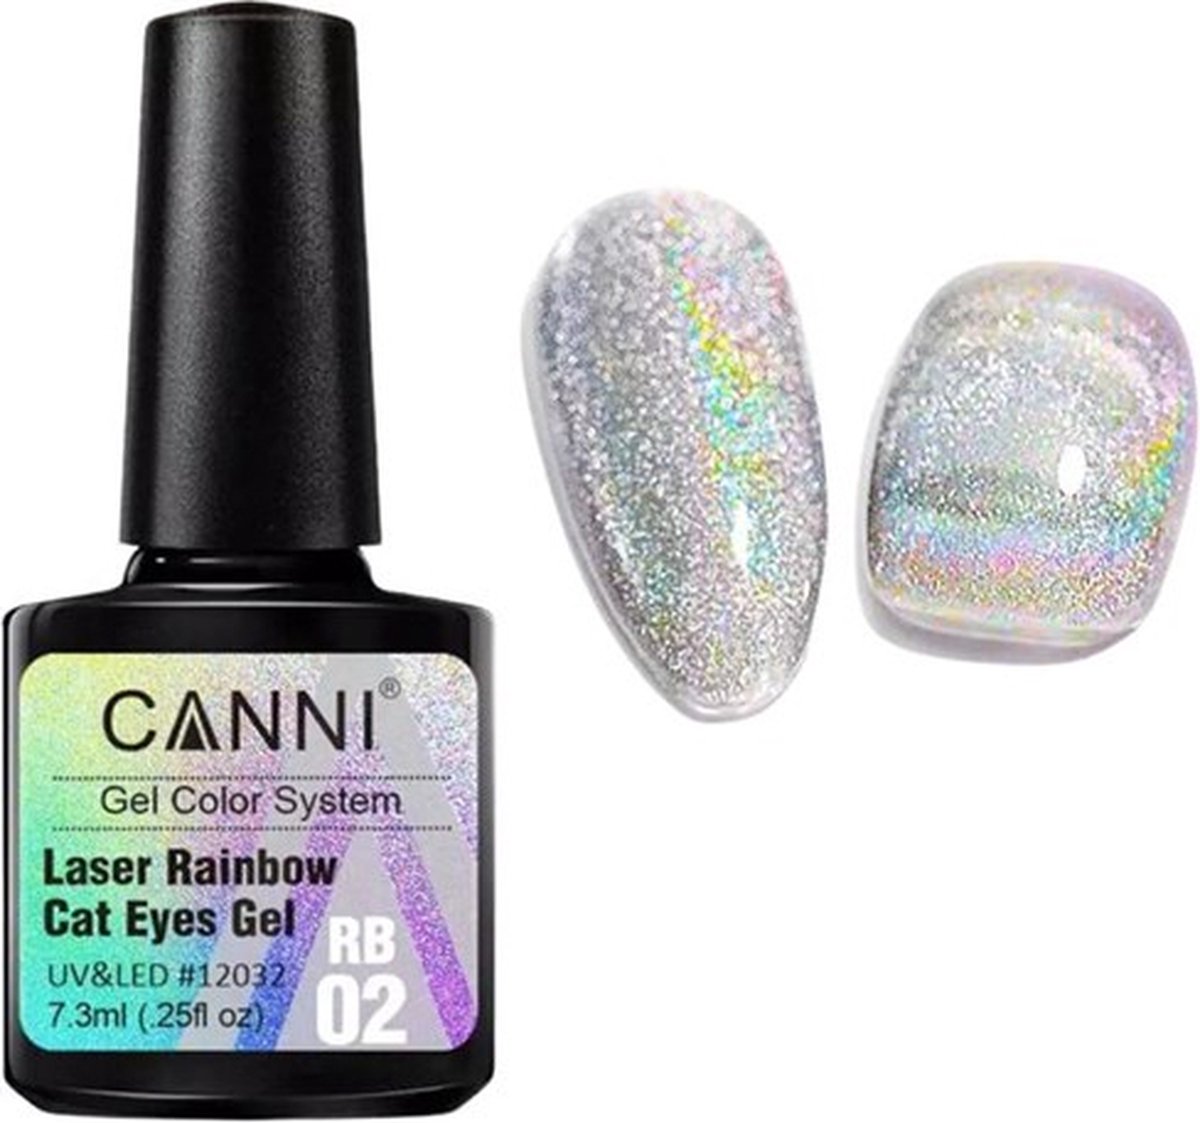 Rainbow cateye gellak RB02 - Gellak 7,3ml - Nailart - Nagelversiering - Nagelverzorging - Nagelstyliste - Glitters - Cateye nagels